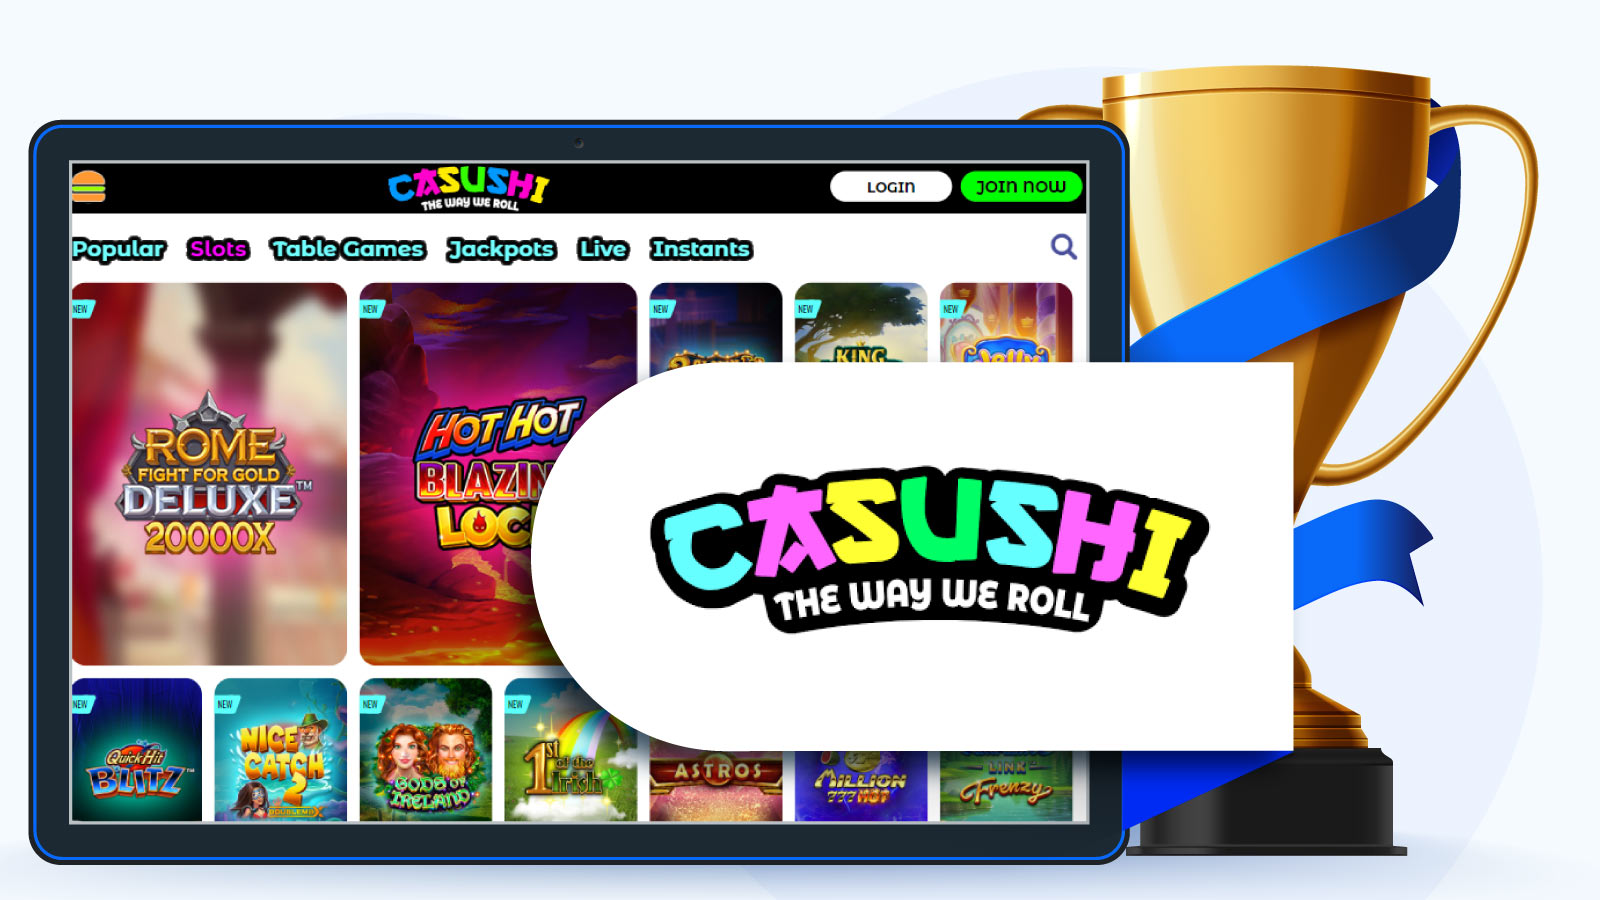 Casushi Casino - Best Neteller Casino Overall